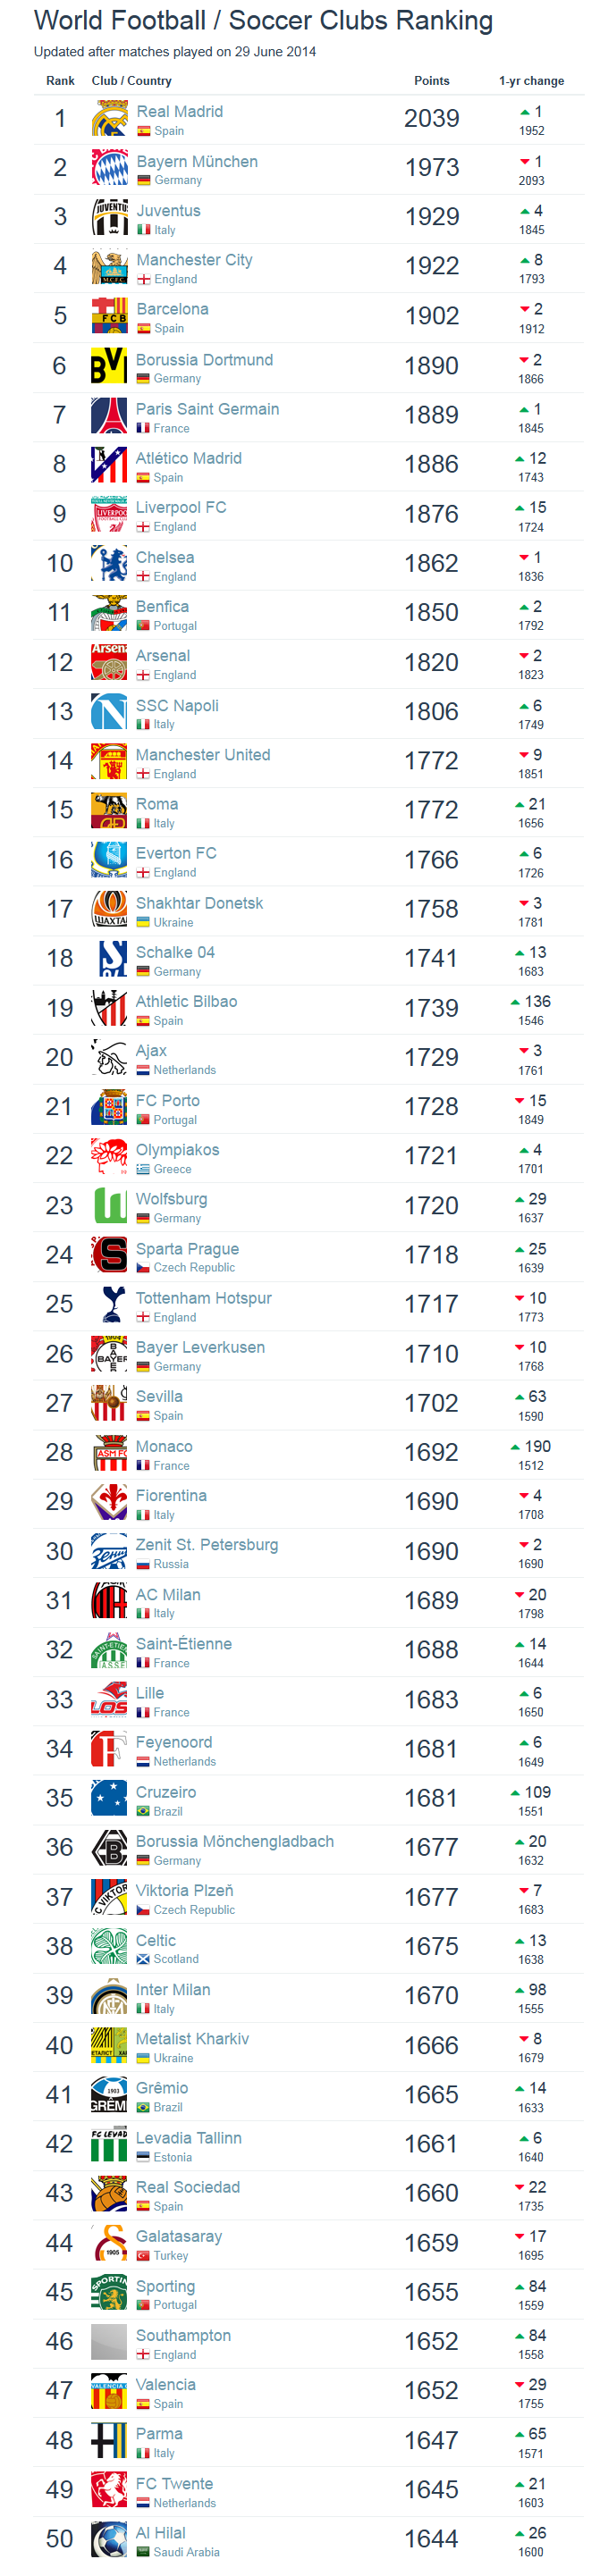 World Football - Soccer Clubs Ranking - FootballDatabase